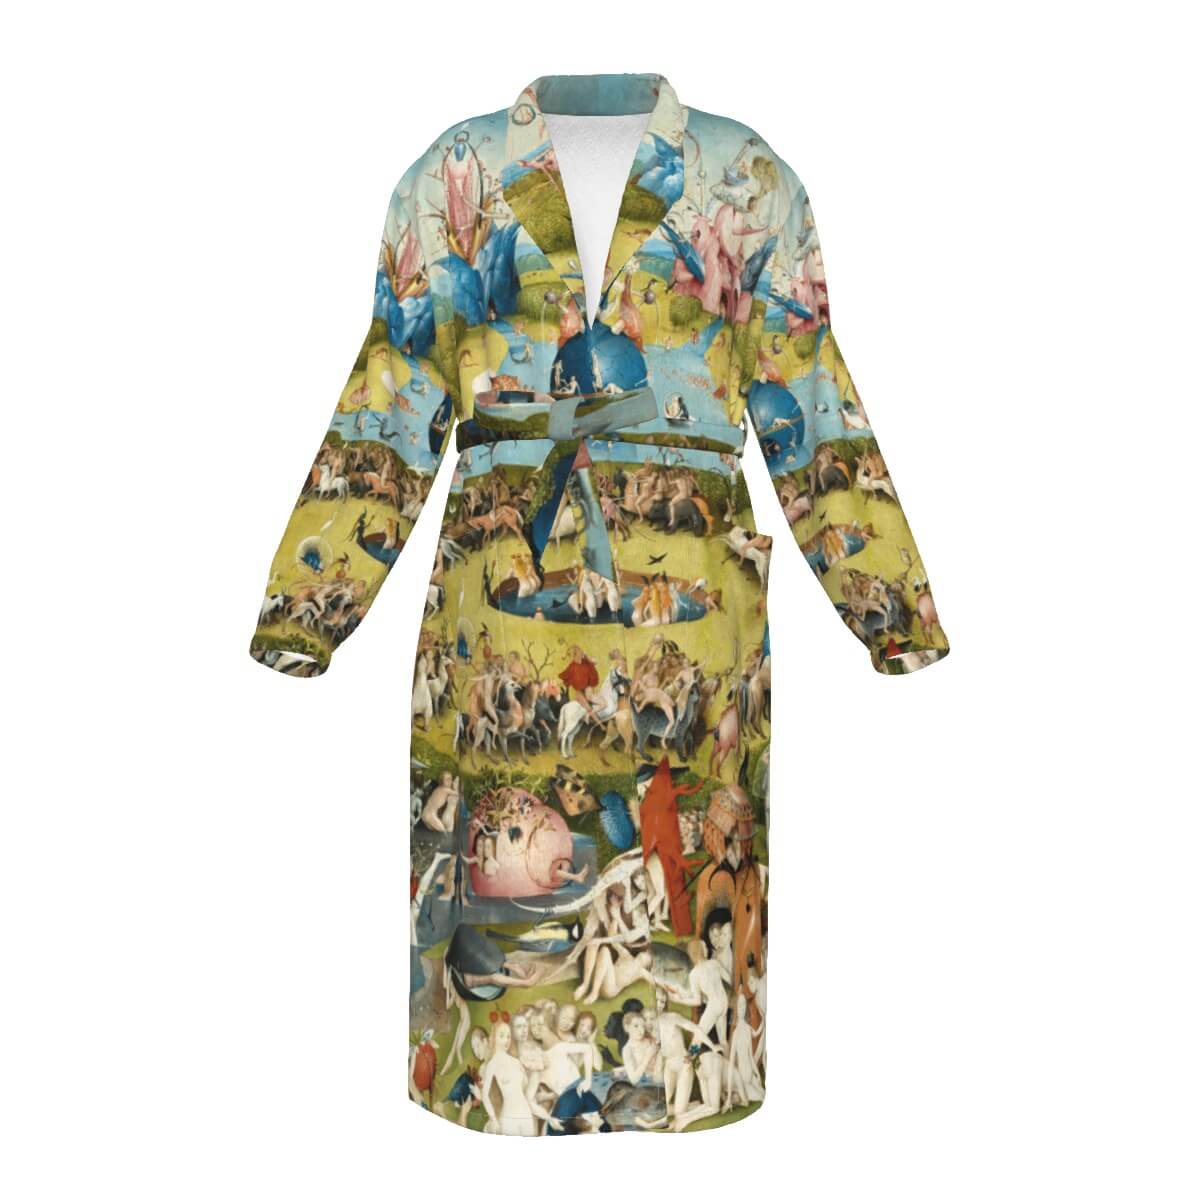 Hieronymus Bosch Fleece Robe Front View